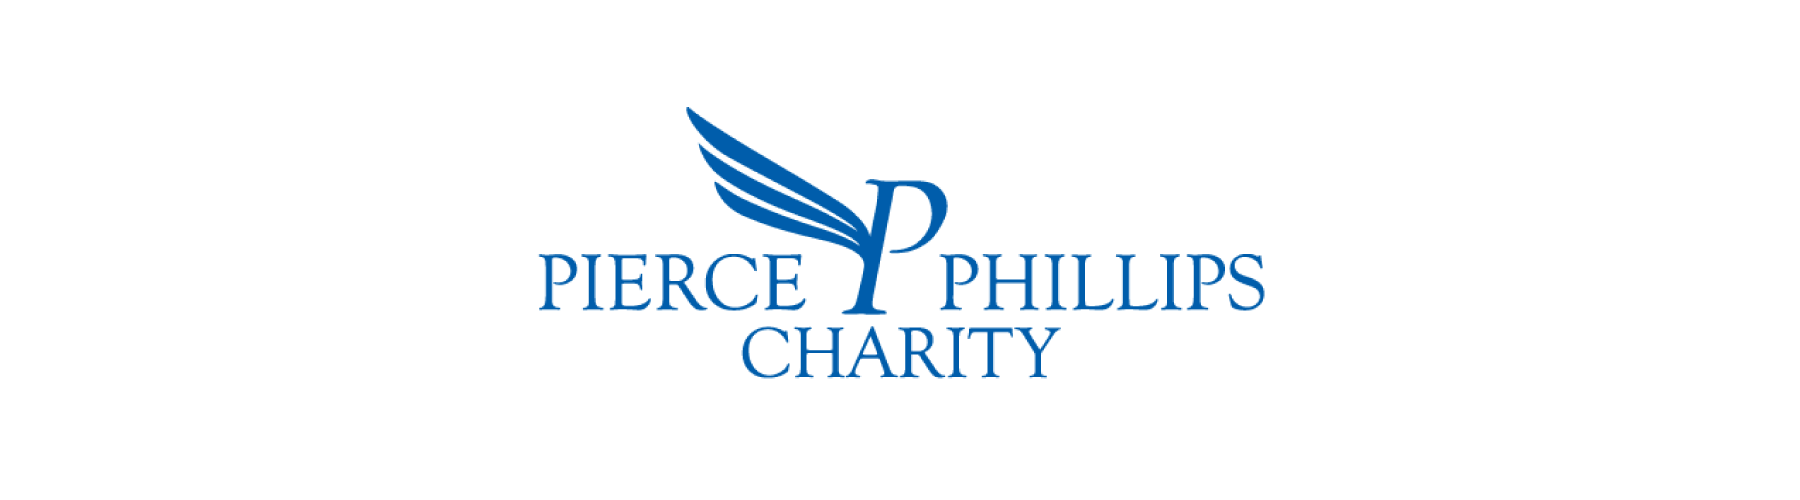 Pierce Phillips Charity Logo Desktop